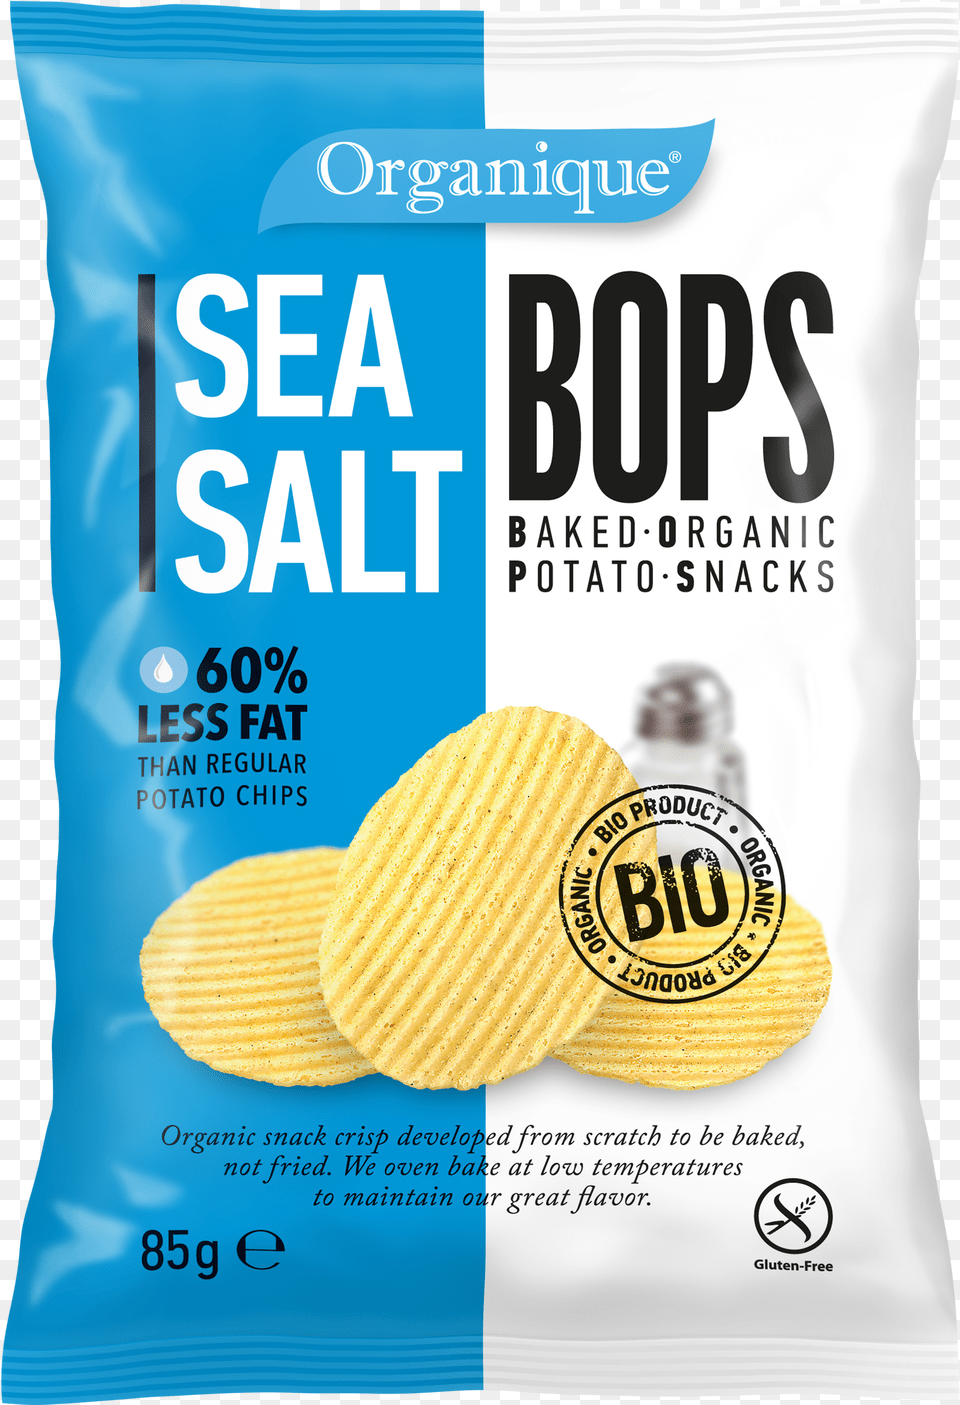 Baked Organic Potato Snacks Sea Salt Bops, Advertisement, Food, Bread, Snack Png